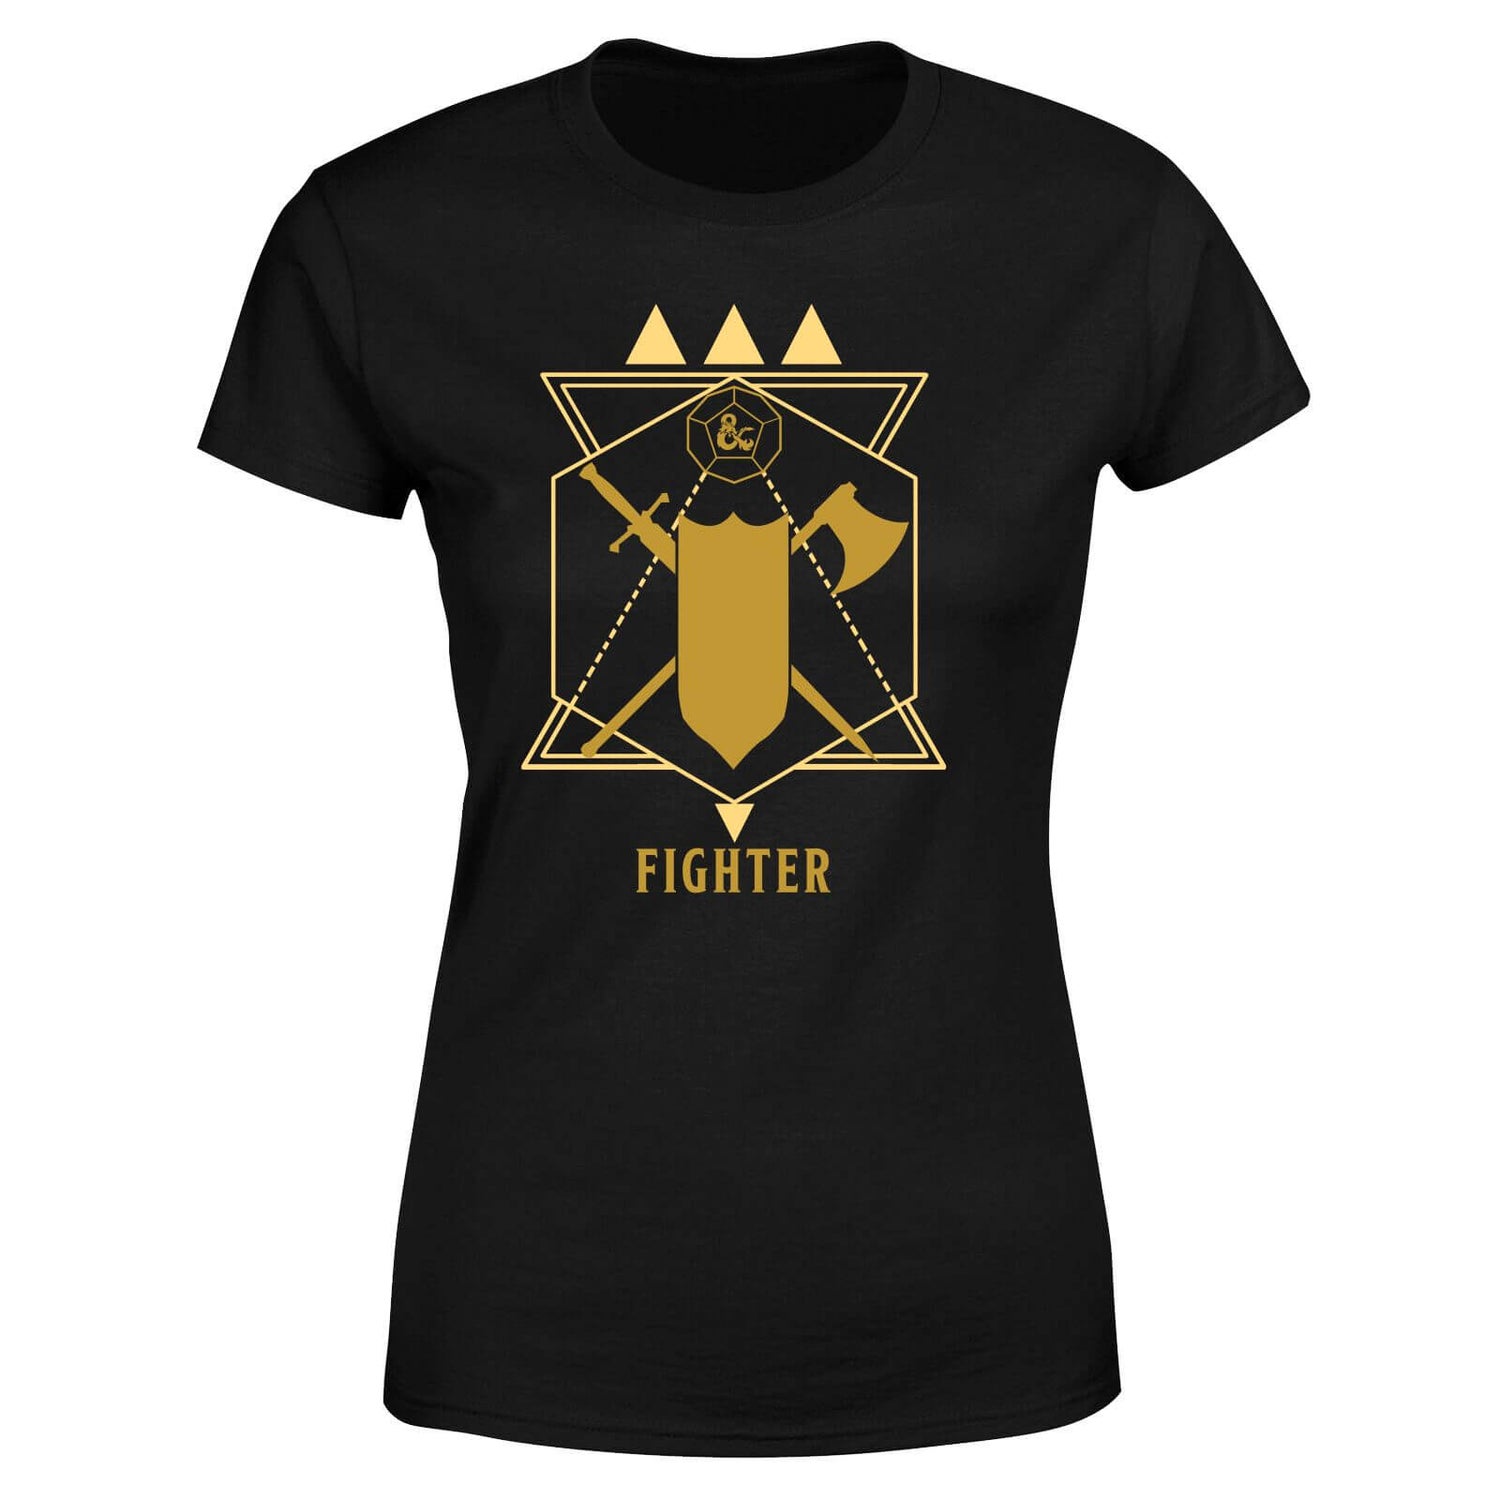 Dungeons & Dragons Fighter Women's T-Shirt - Black